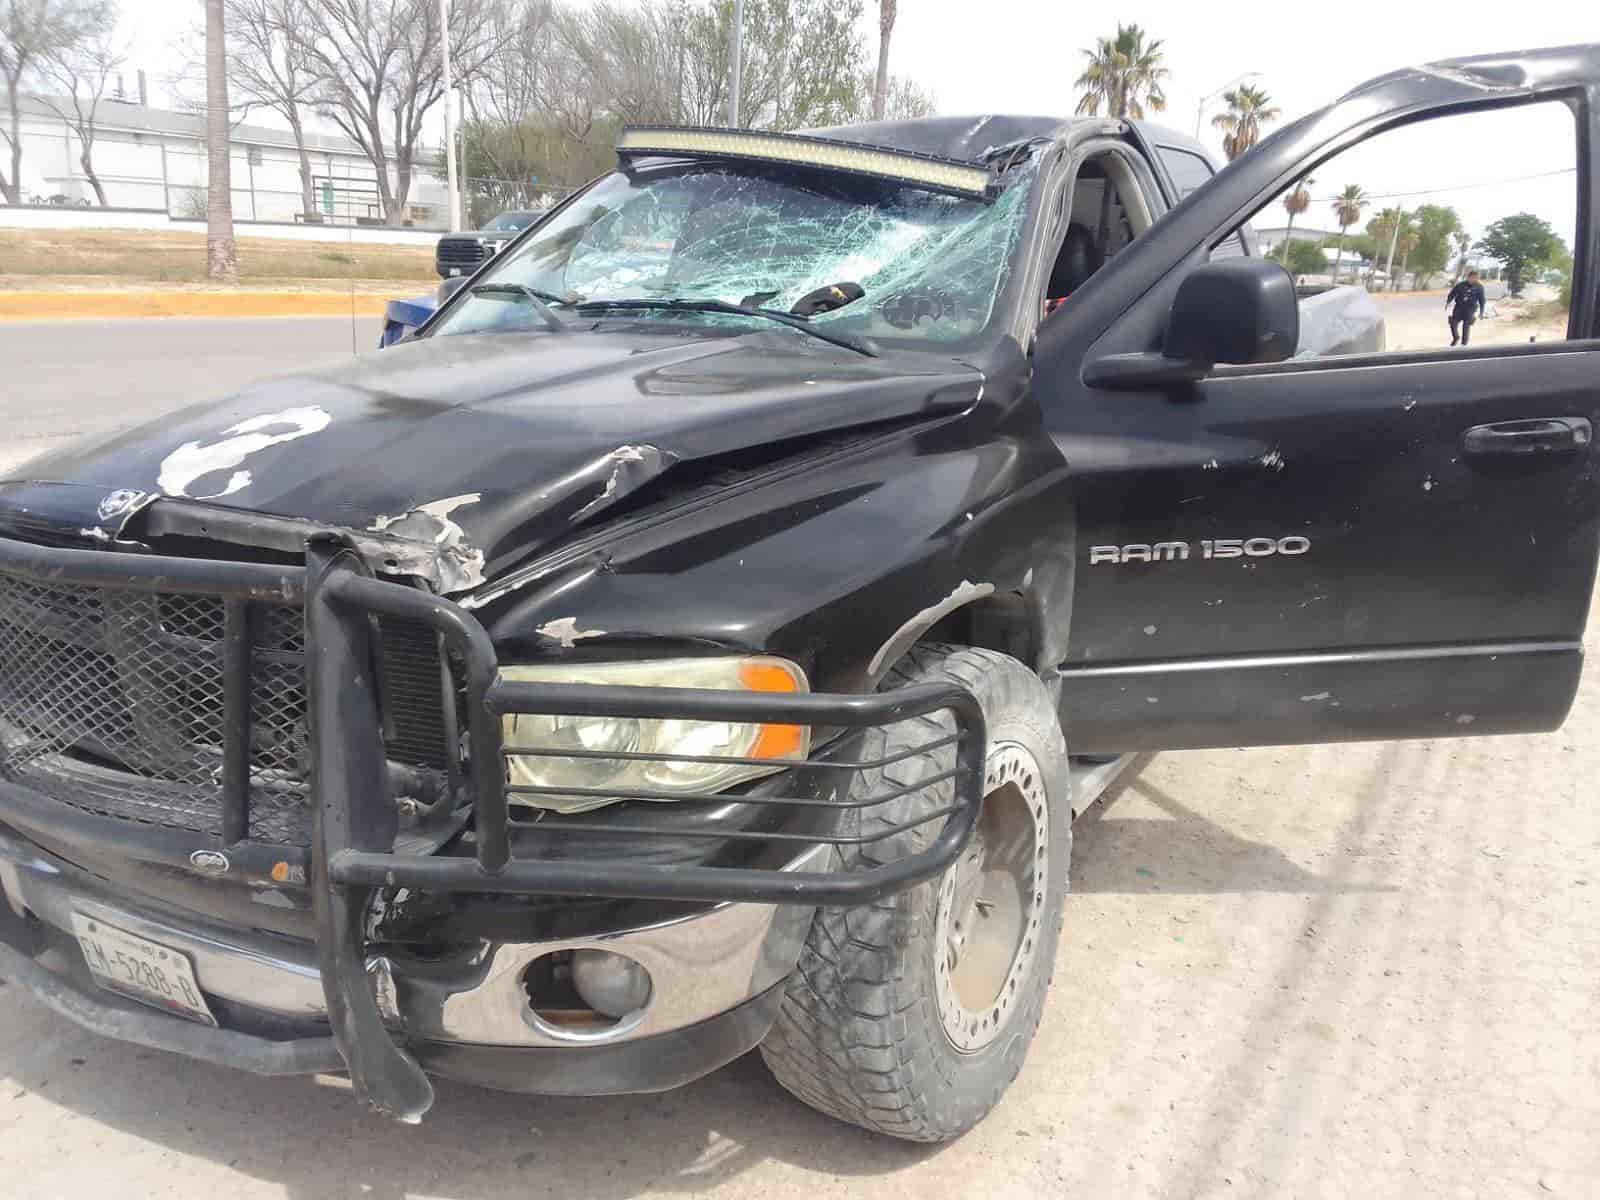 Camioneta Fuera de Control Impacta en Incidente en la Carretera Presa de la Amistad